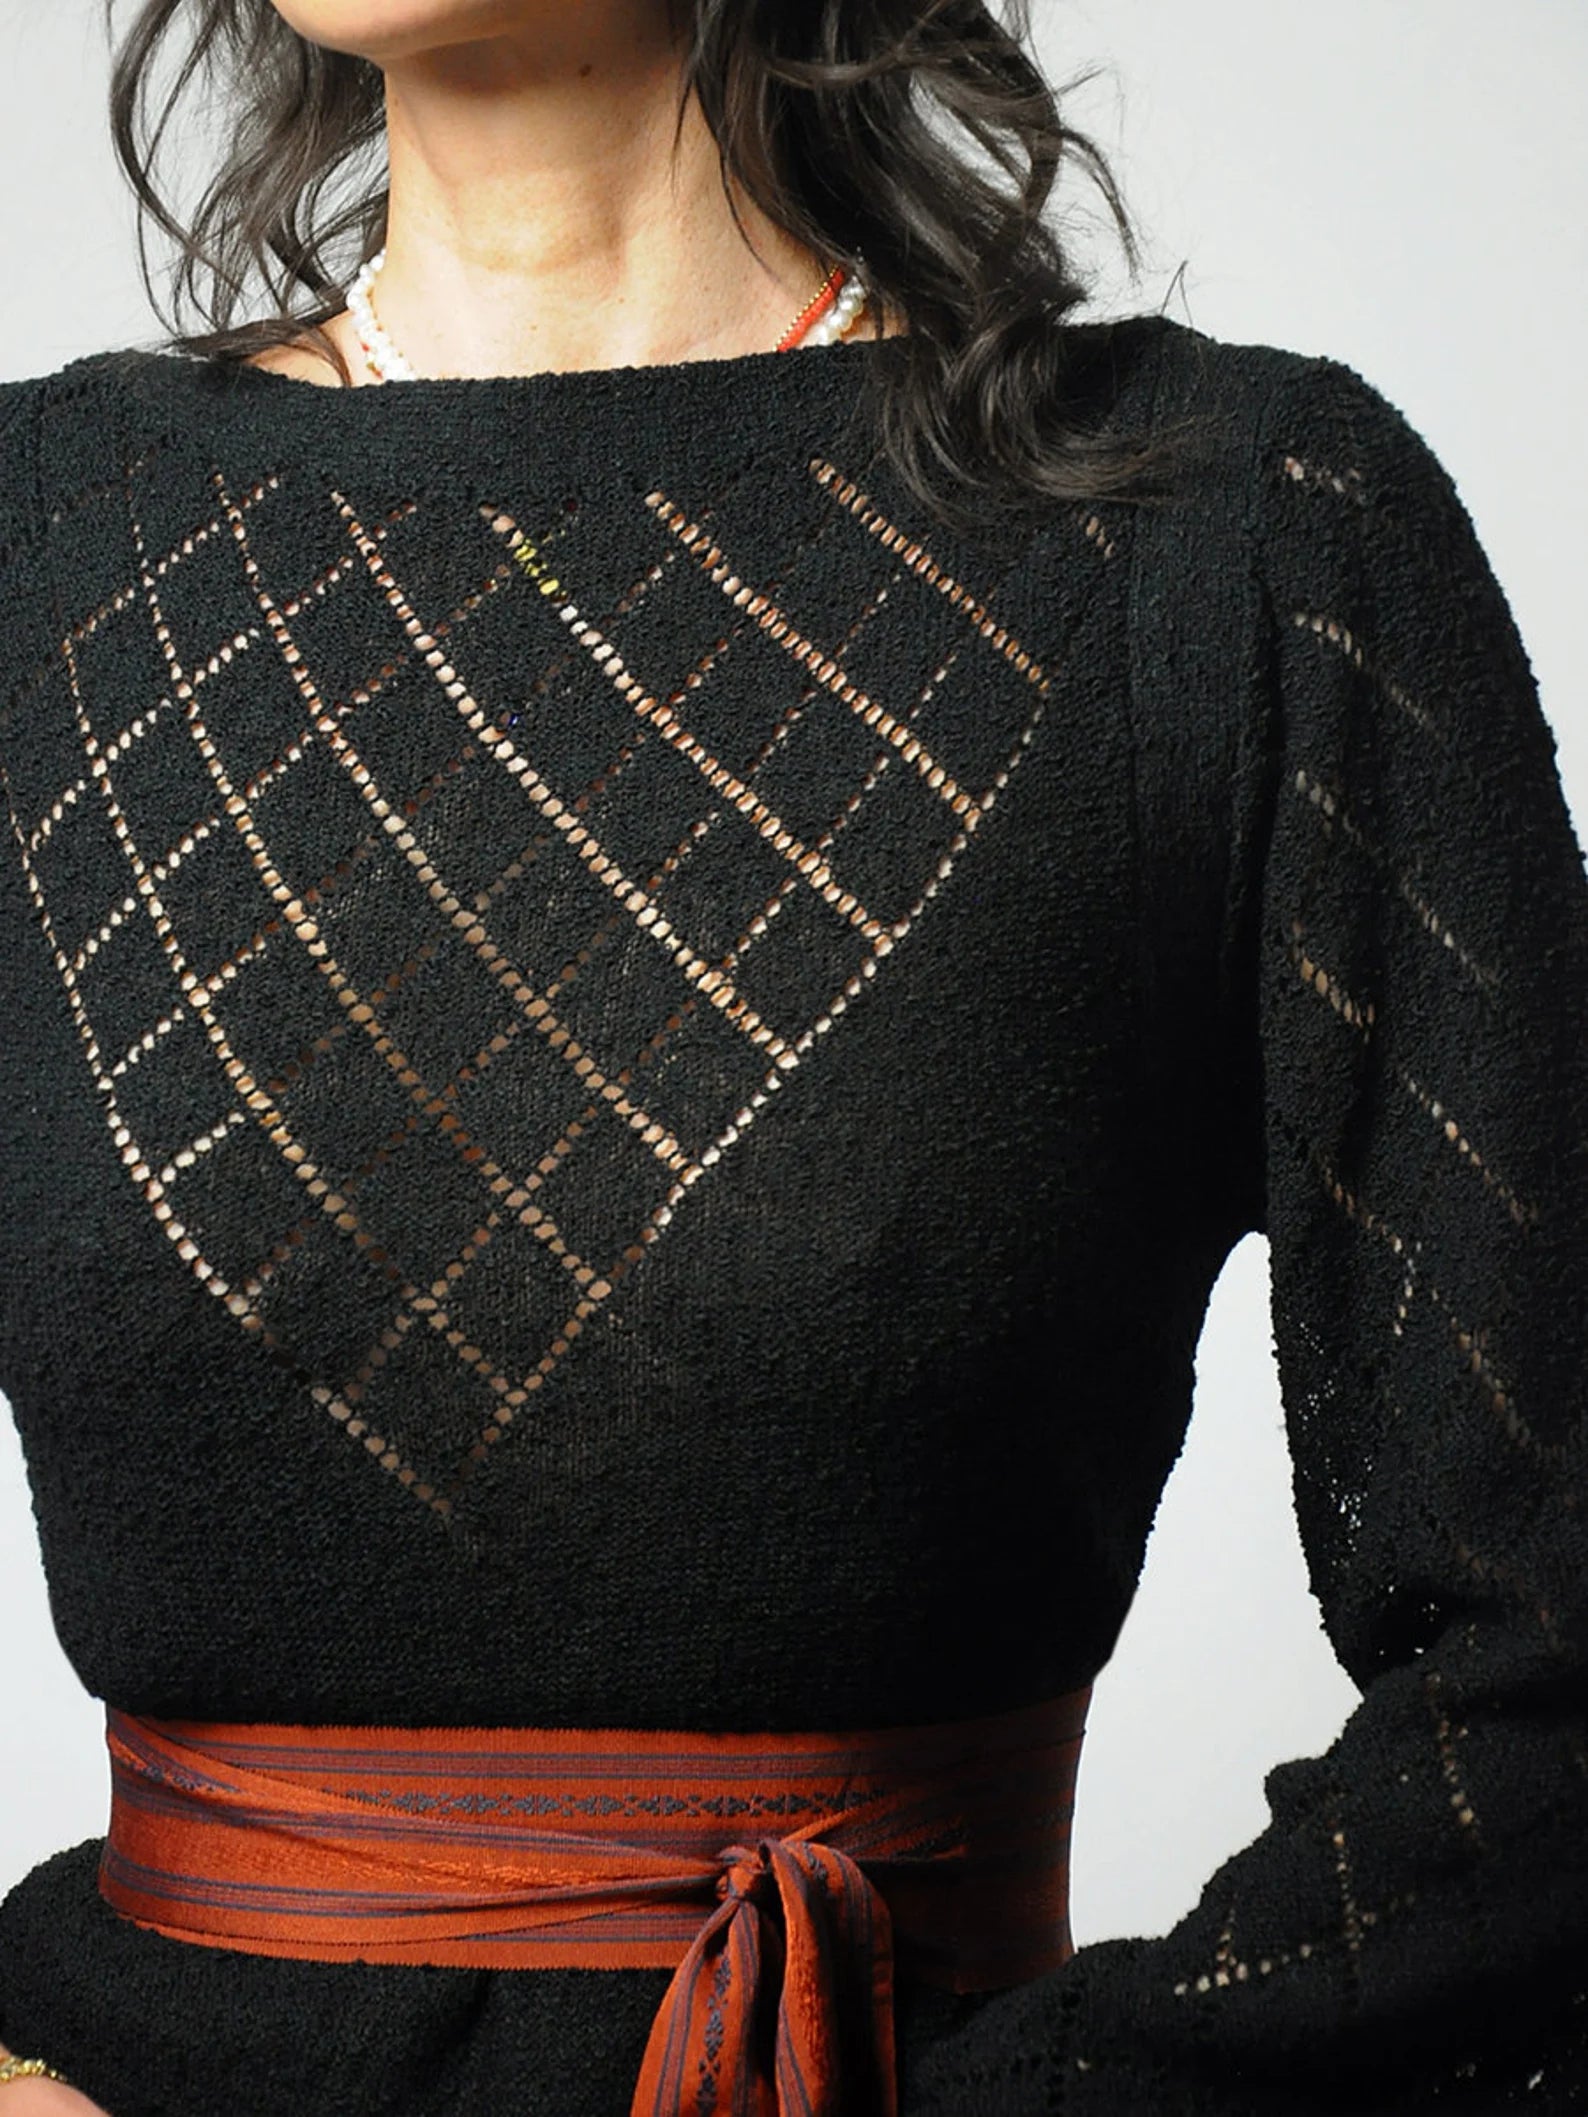 1970's Onyx Pointelle Knit Dress